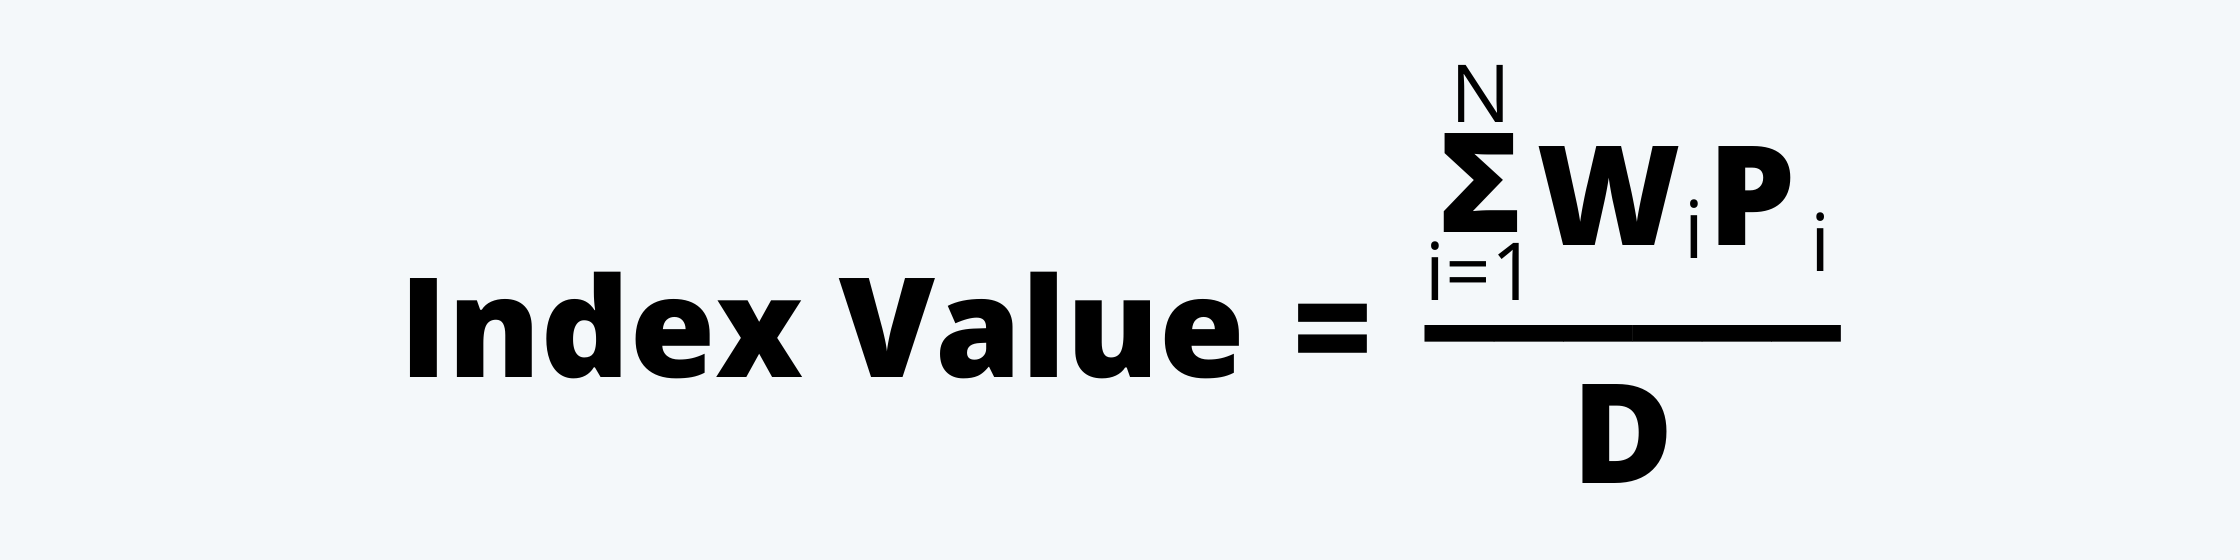 Index value Formula Equity Investment CFA Level 1 Study Notes